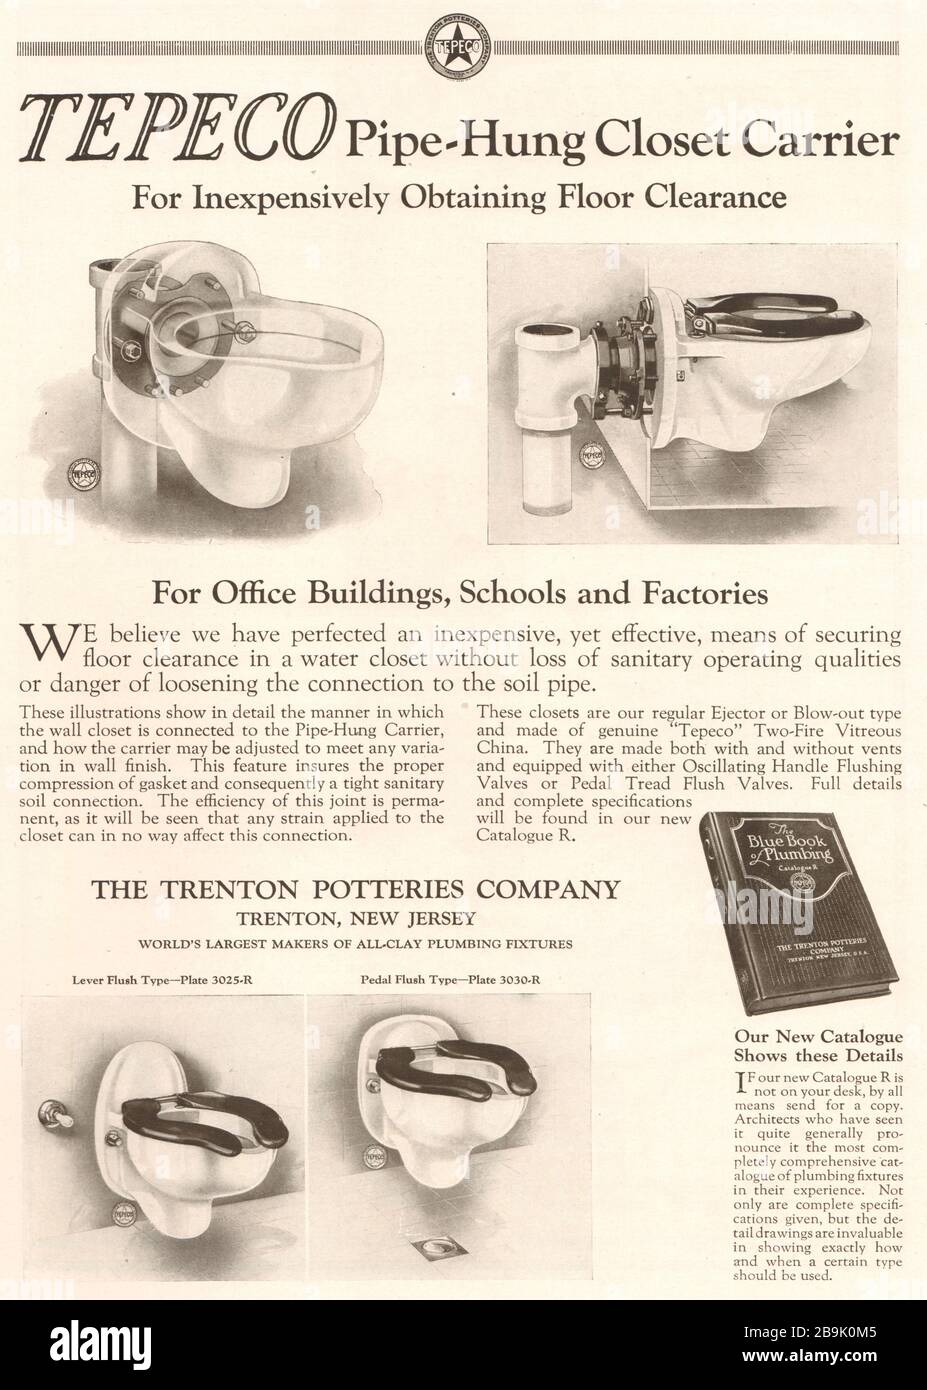 Tepeco wandschrank mit Rohraufhängungshalterung. The Trenton Potteries Company, Trenton, New Jersey (1922) Stockfoto